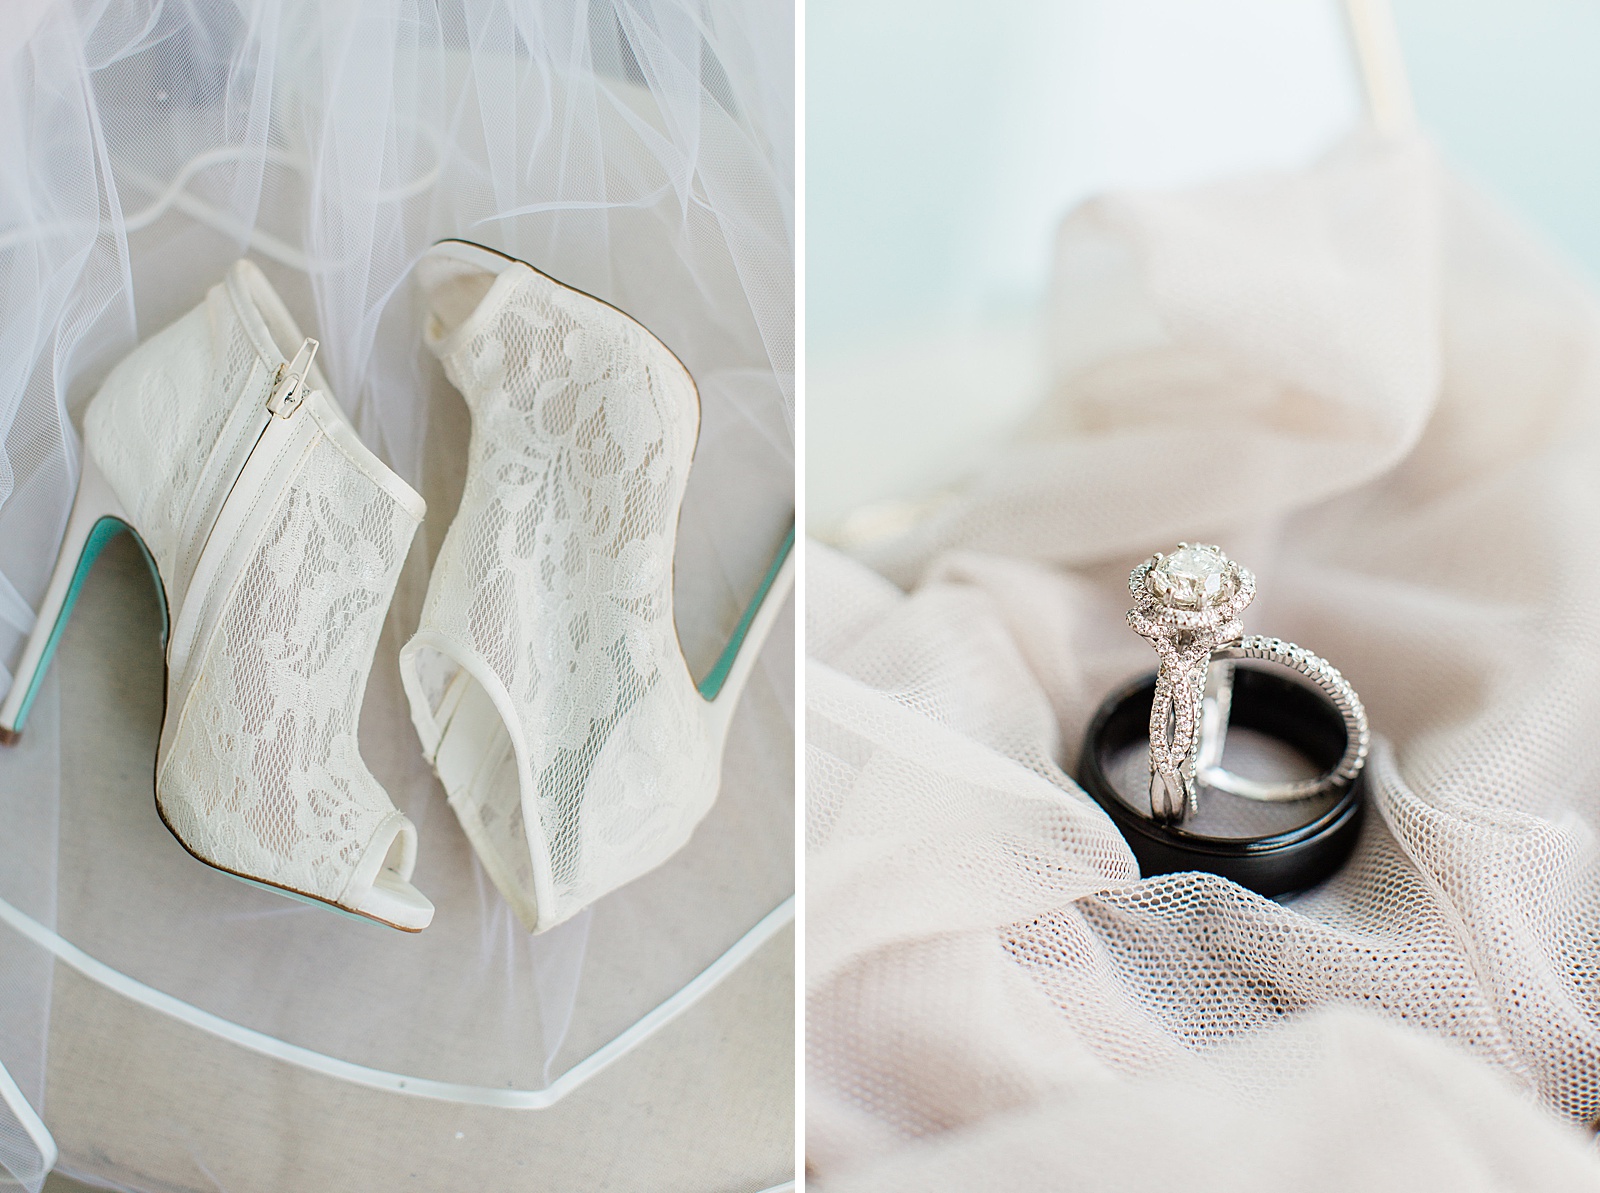 Bridal Details at The Addison designed by NYC Wedding Planner, Poppy + Lynn